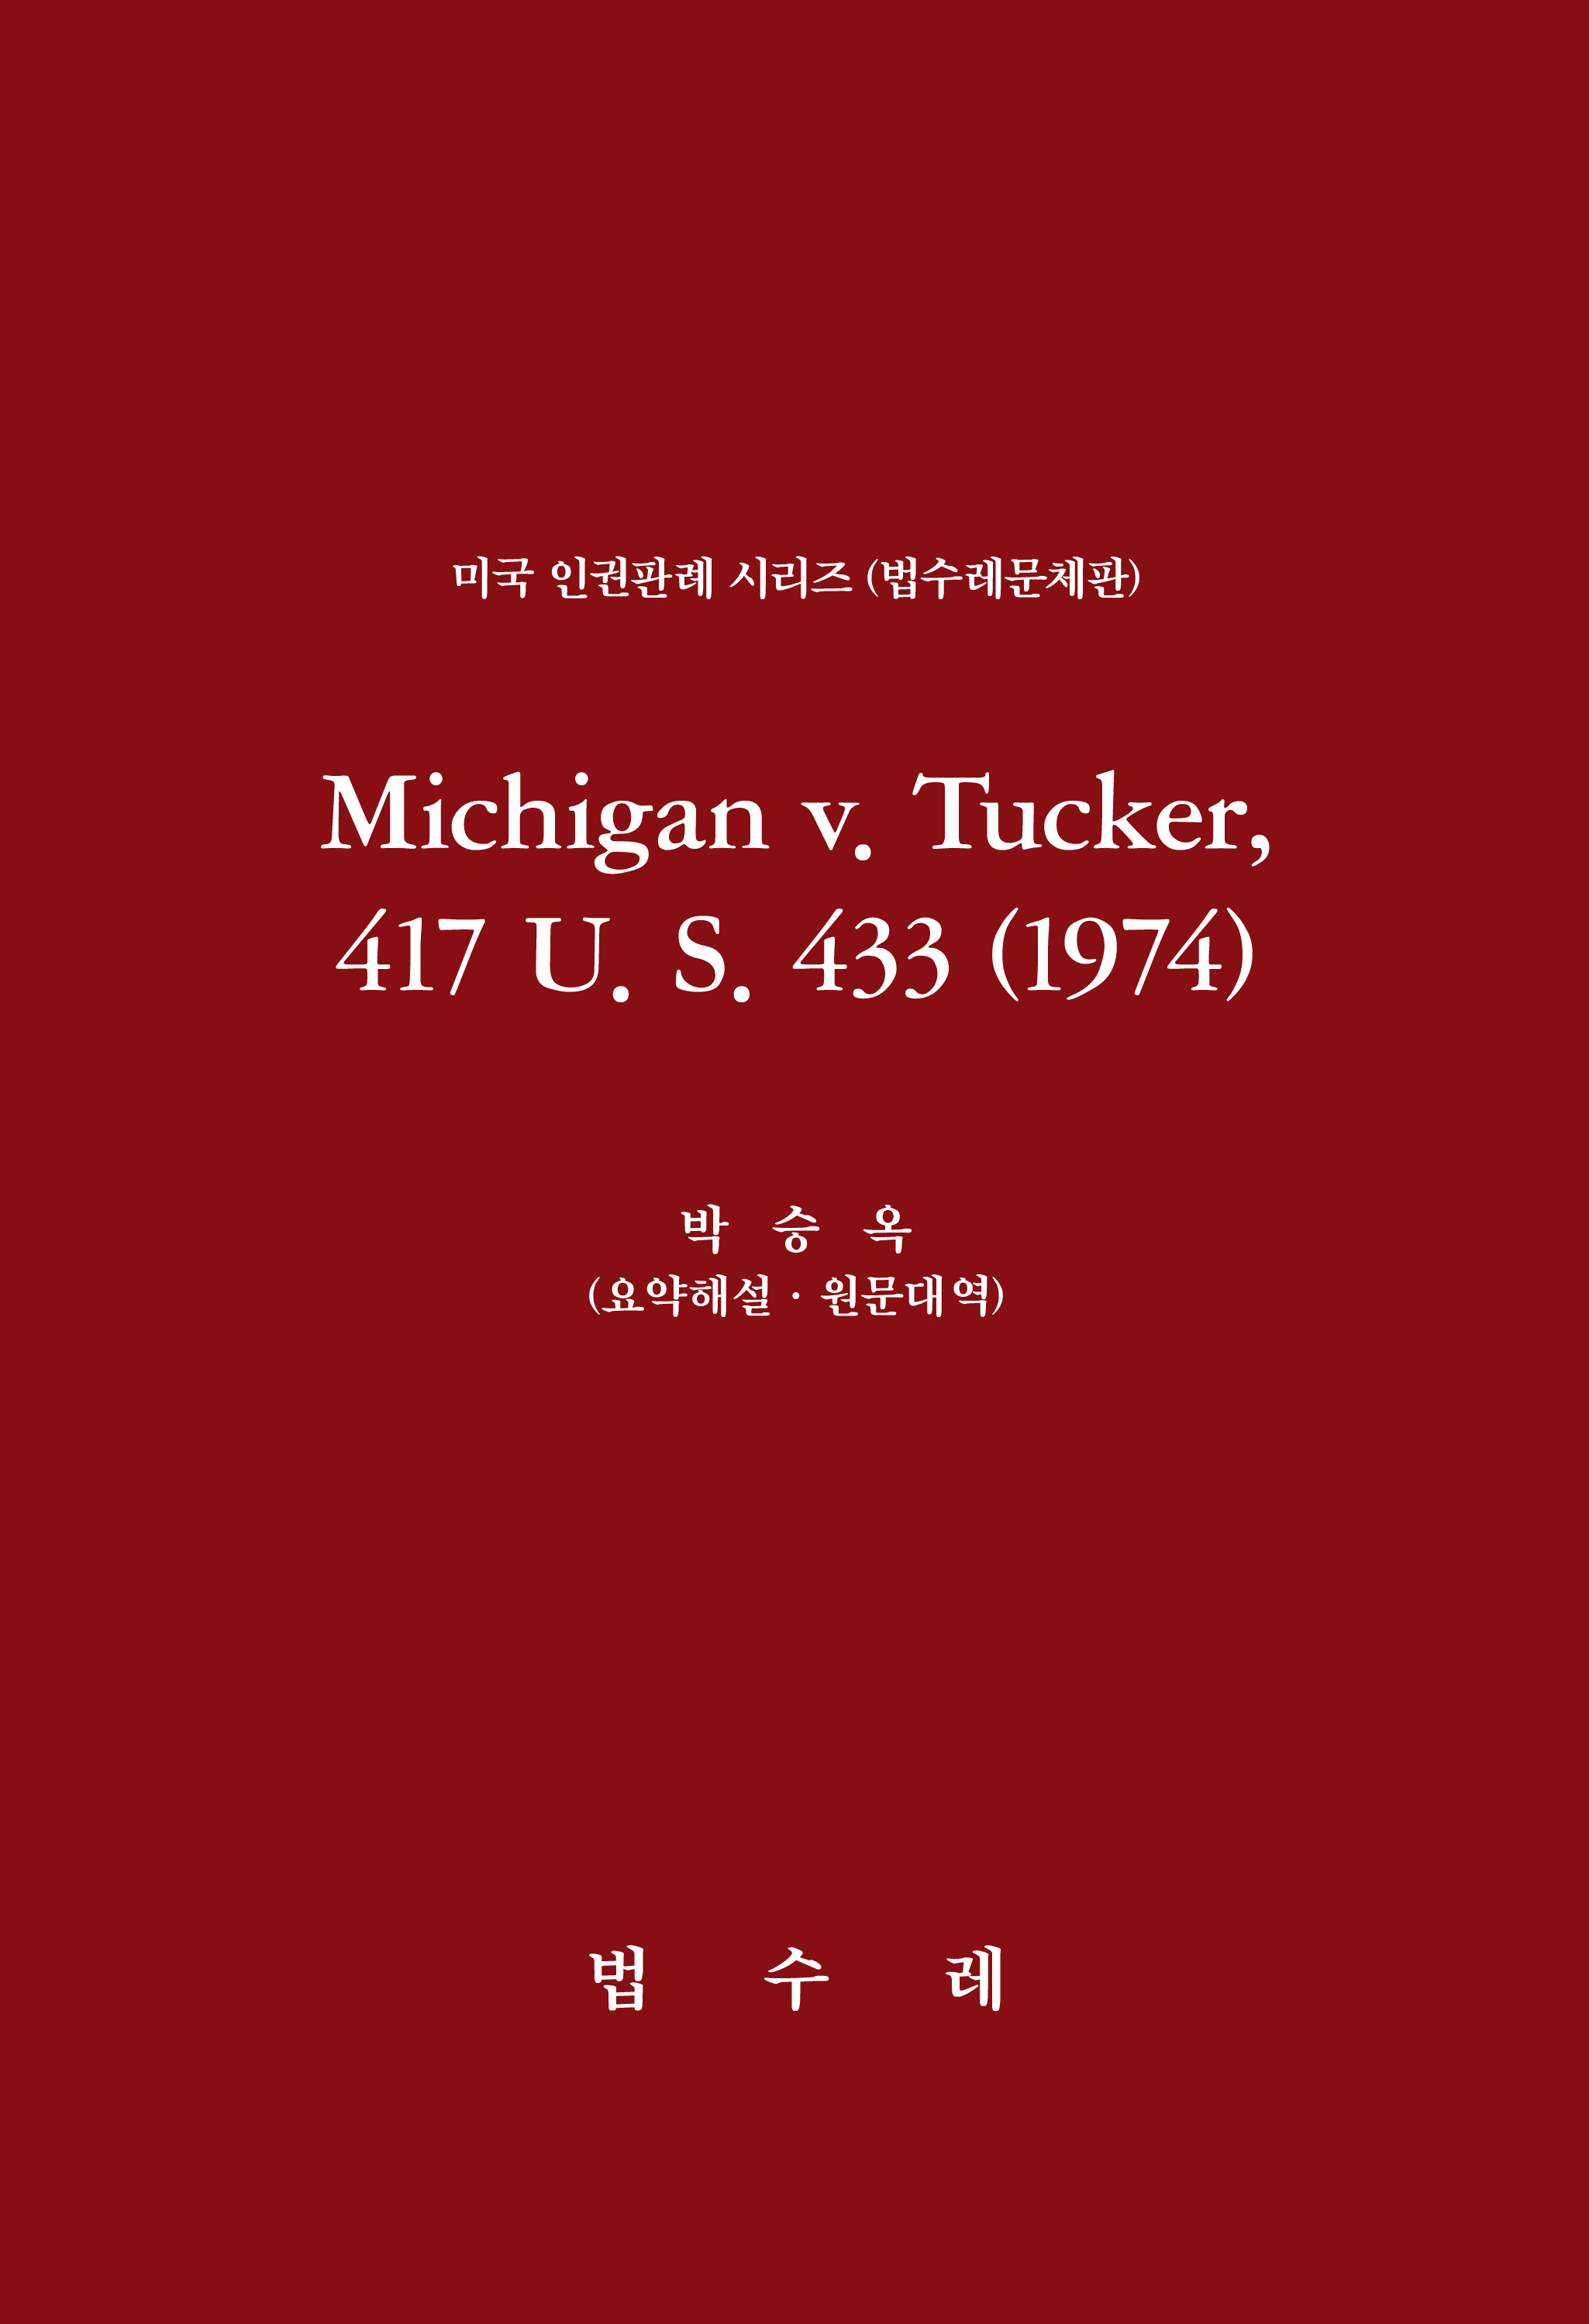 Michigan v. Tucker, 417 U. S. 433 (1974)